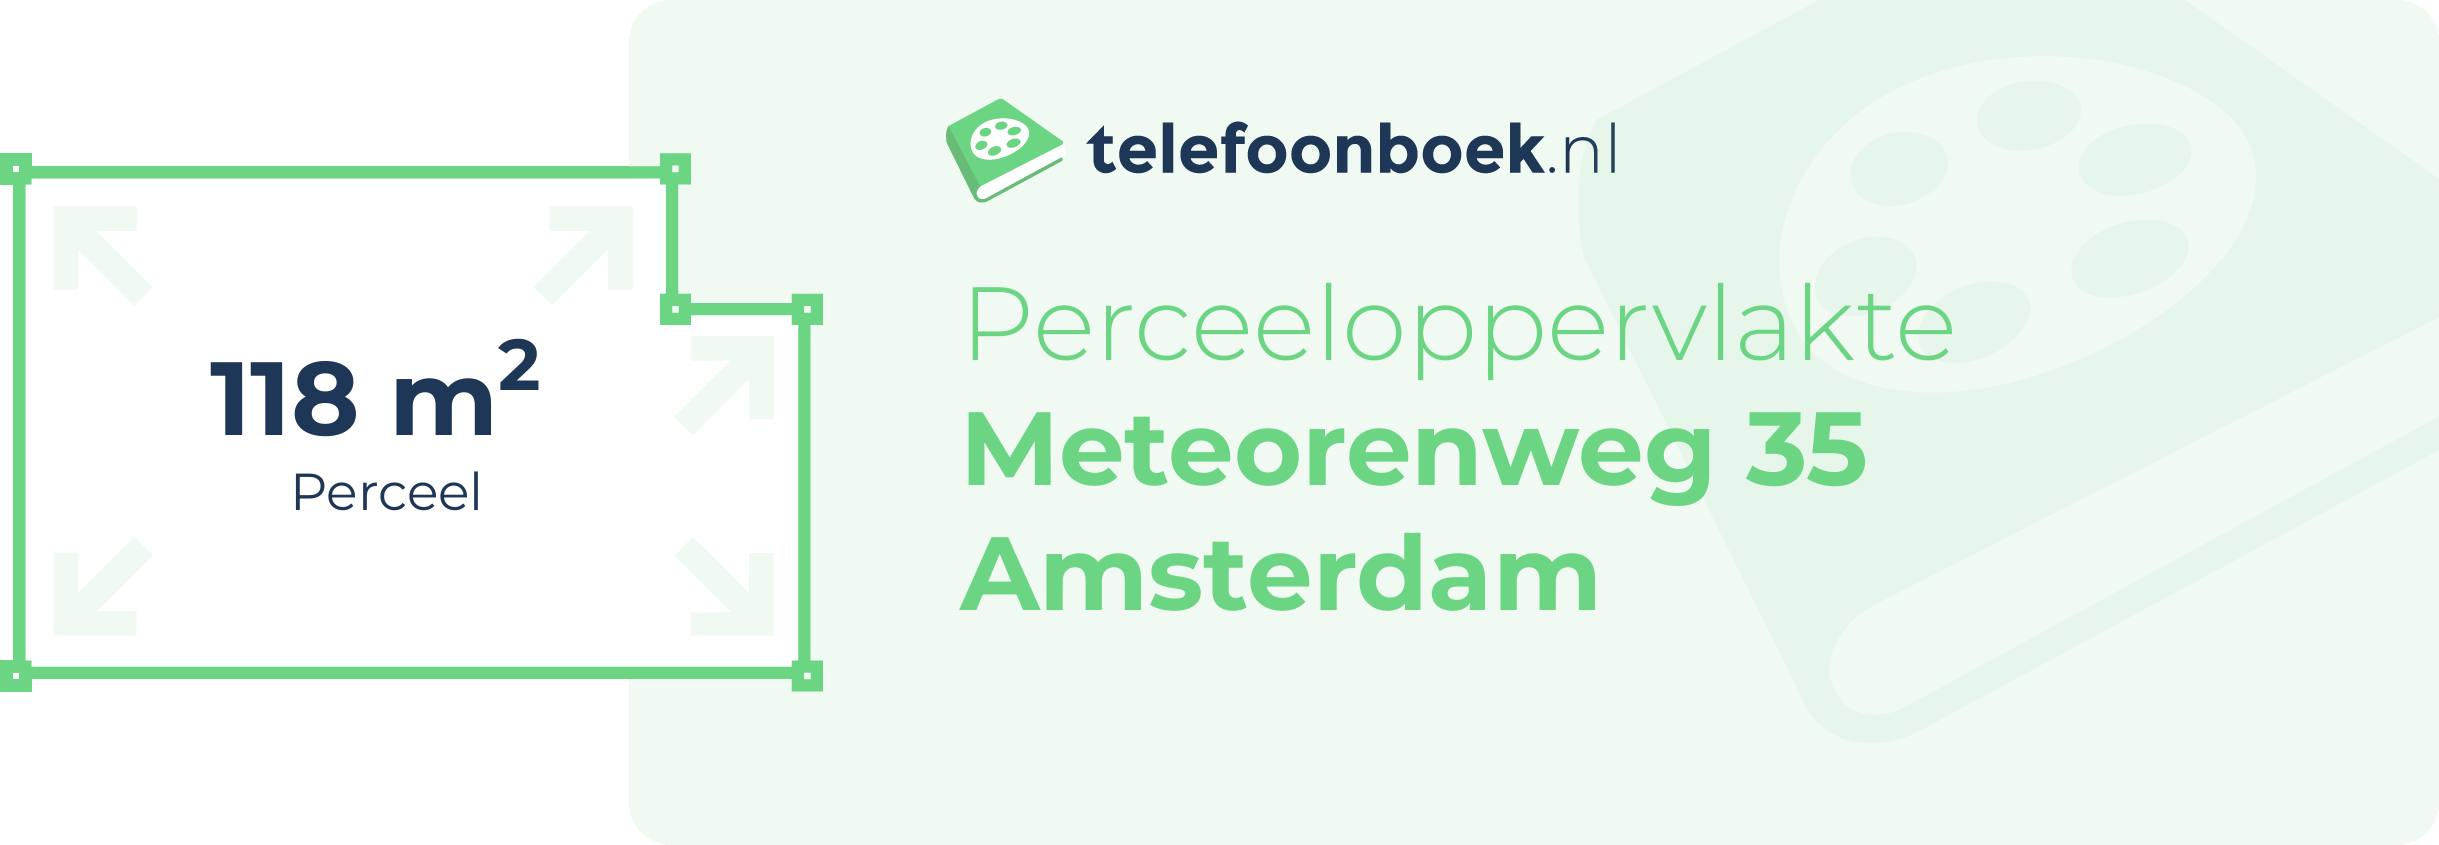 Perceeloppervlakte Meteorenweg 35 Amsterdam